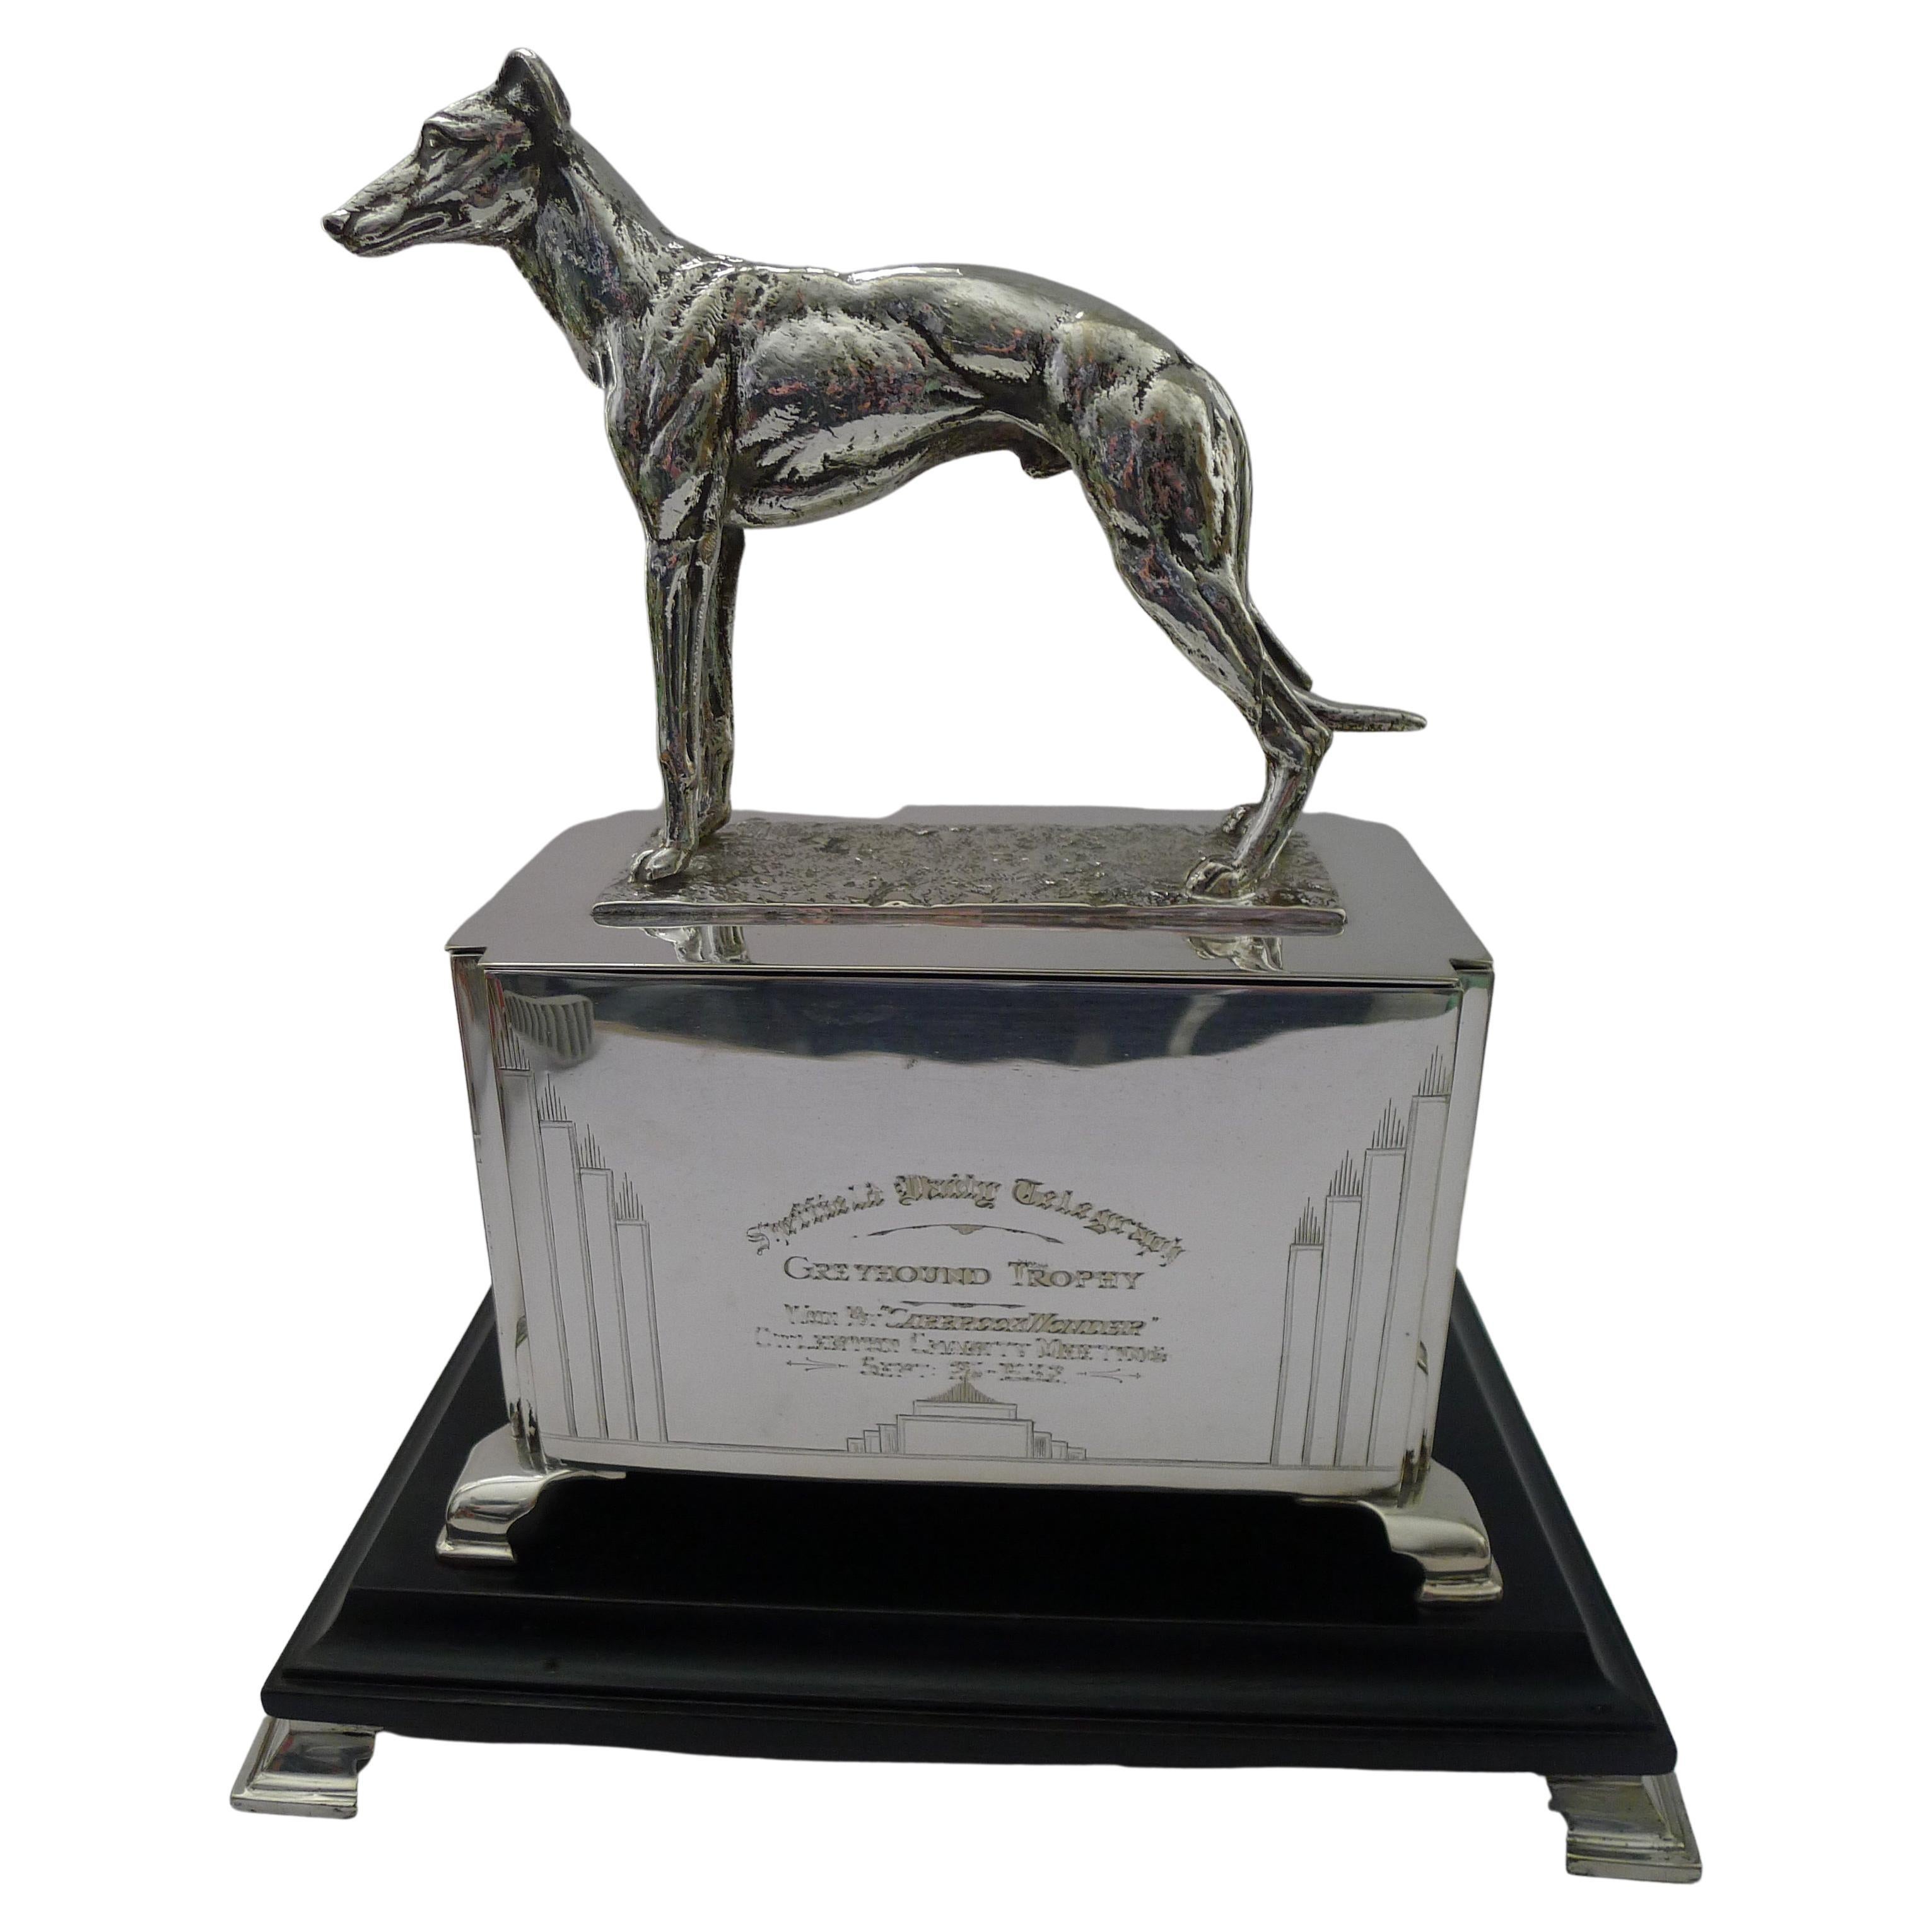 Handsome Art Deco Greyhound Racing Trophy Box, 1932